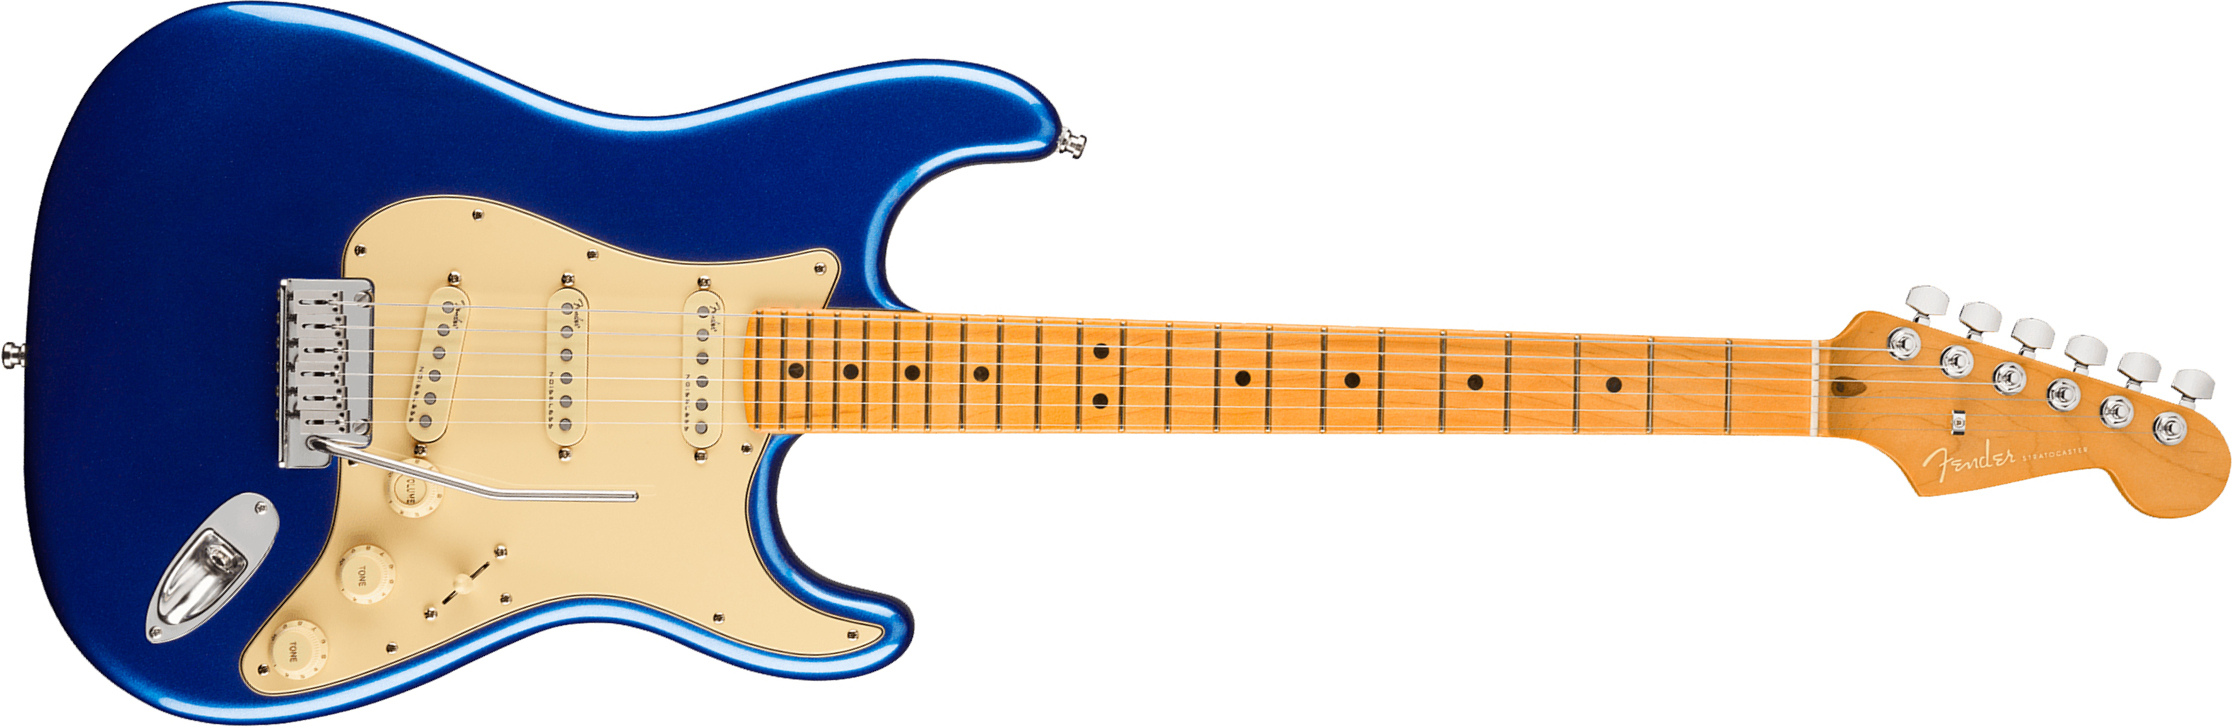 Fender Strat American Ultra 2019 Usa Mn - Cobra Blue - Guitare Électrique Forme Str - Main picture